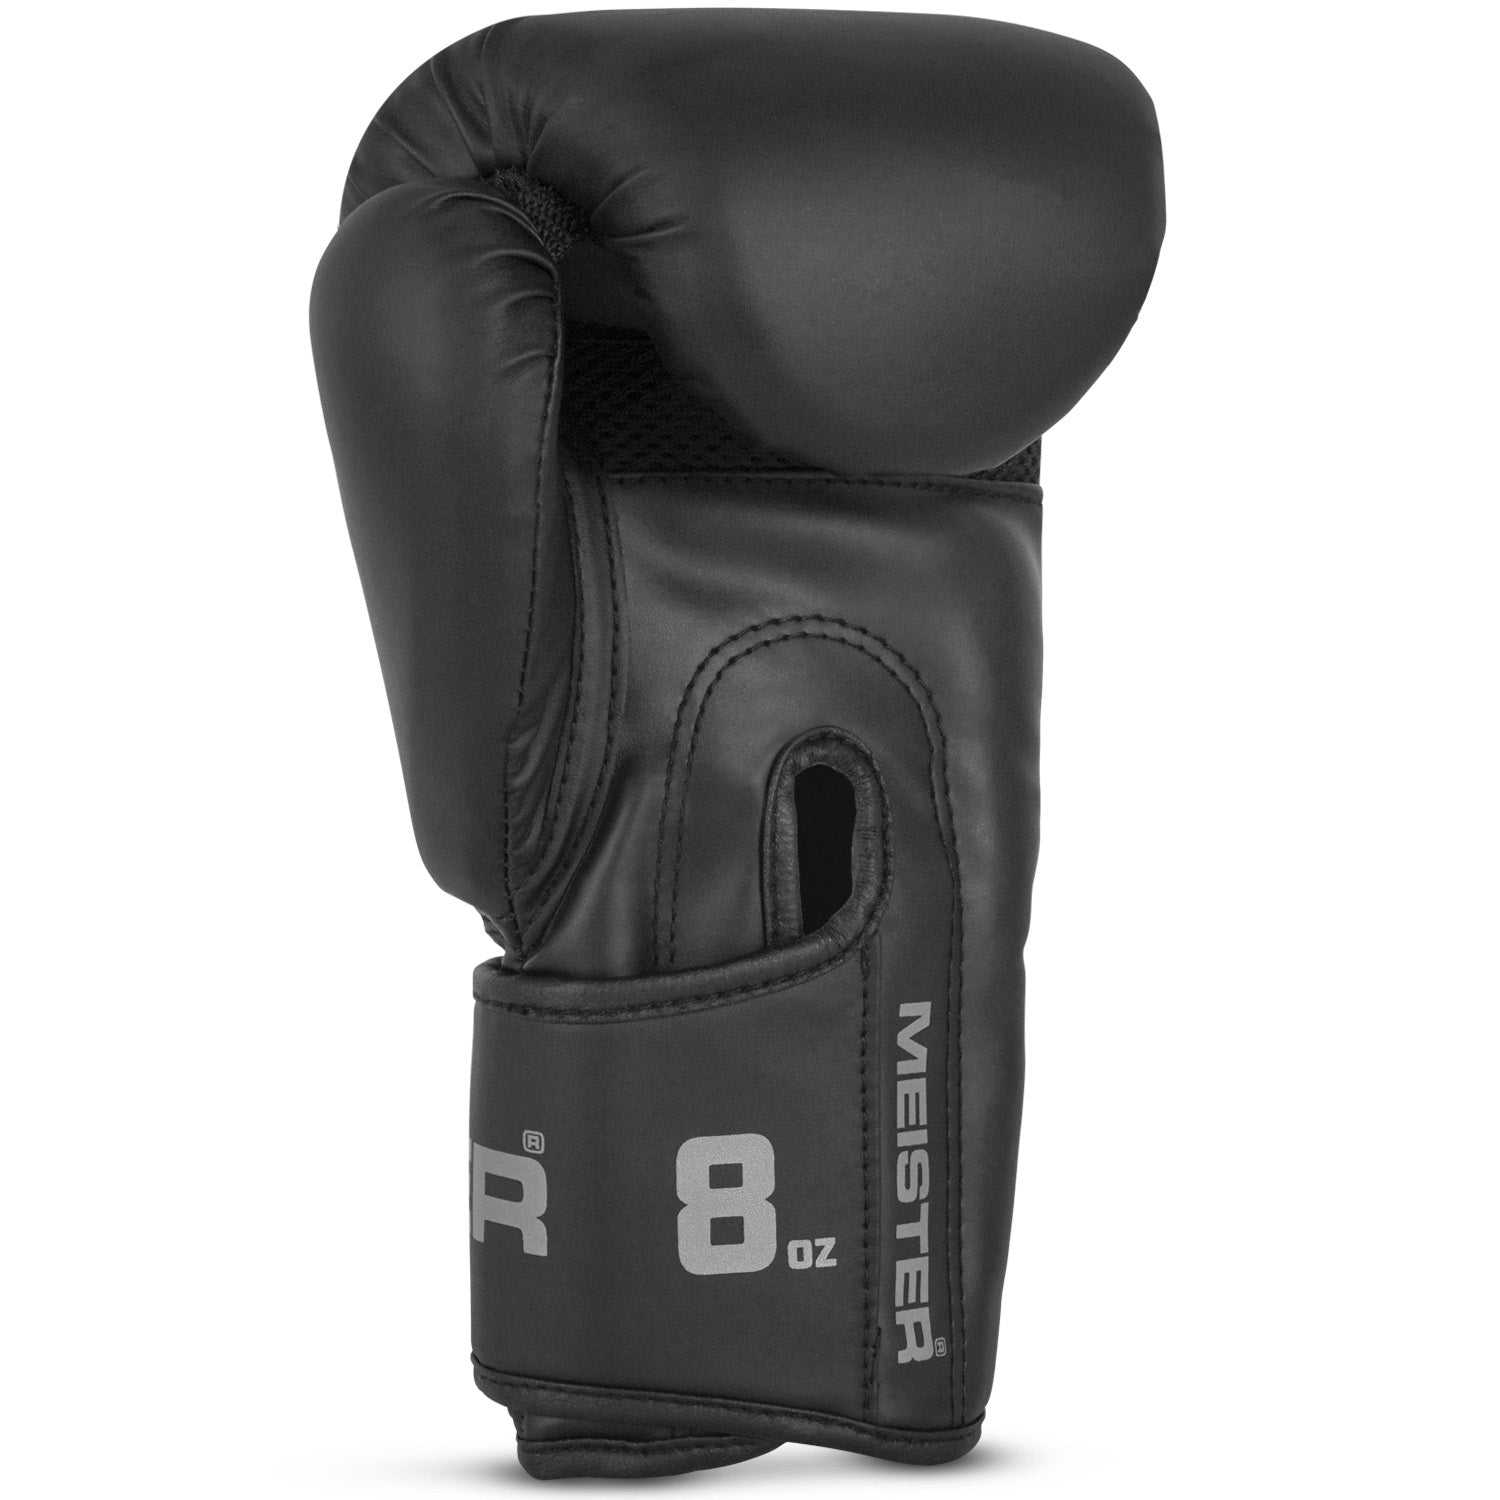 Meister 8oz [CRITICAL] Boxing Gloves - Matte Black